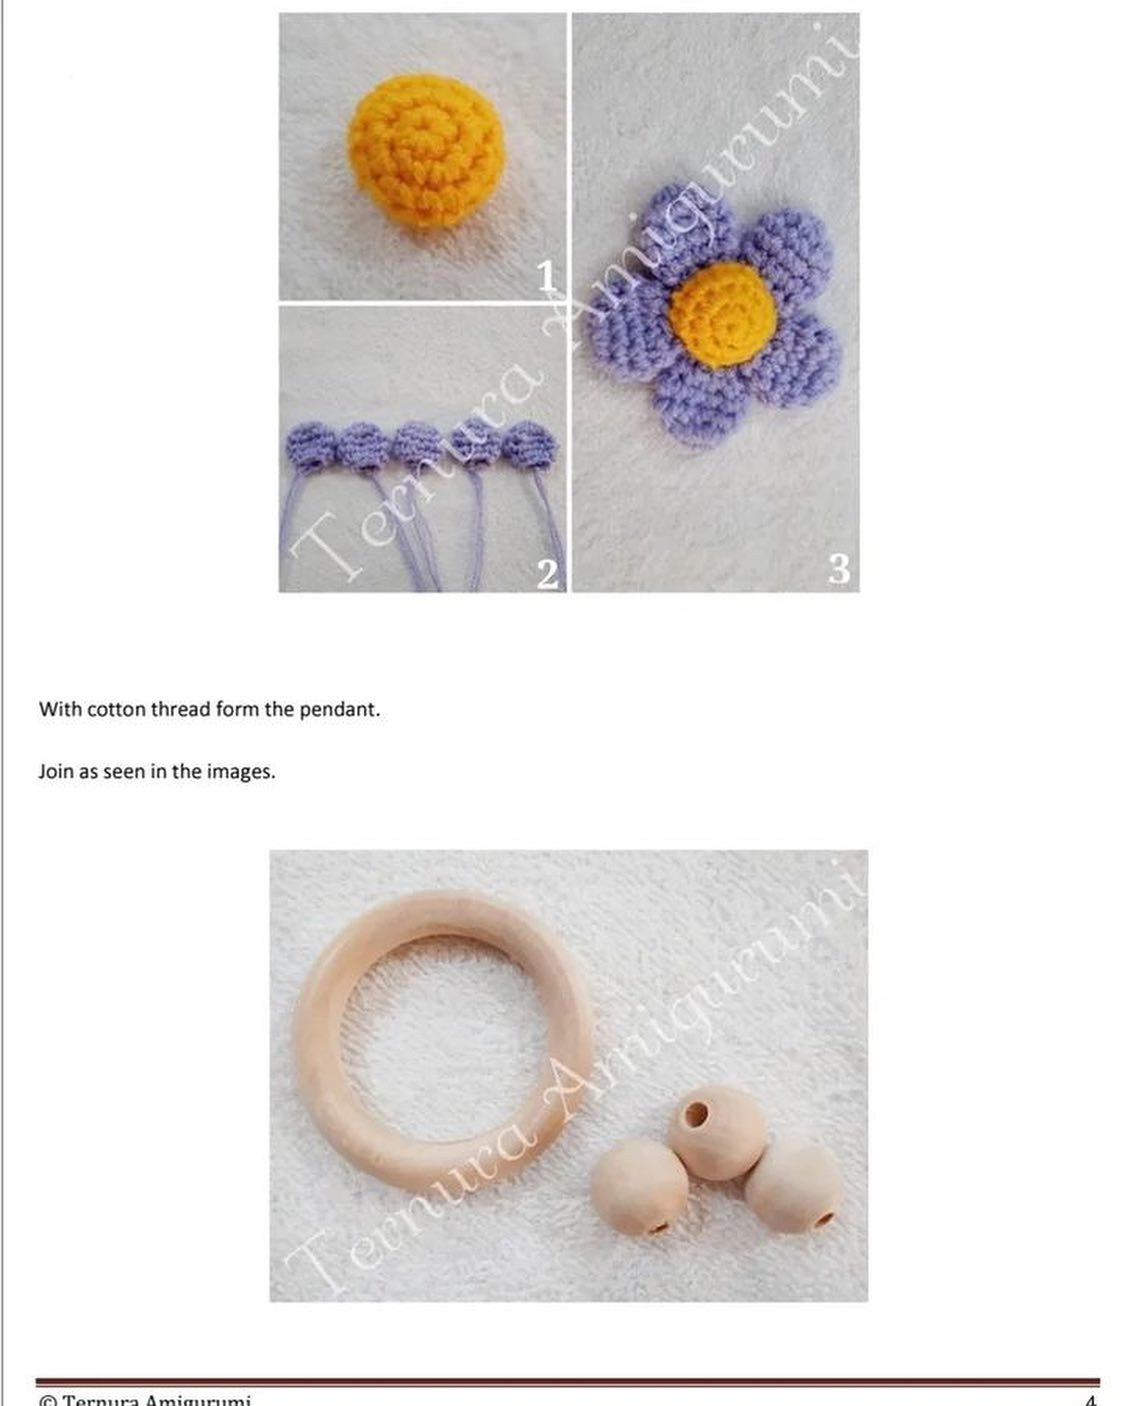 flower pendant free pattern amigurumi